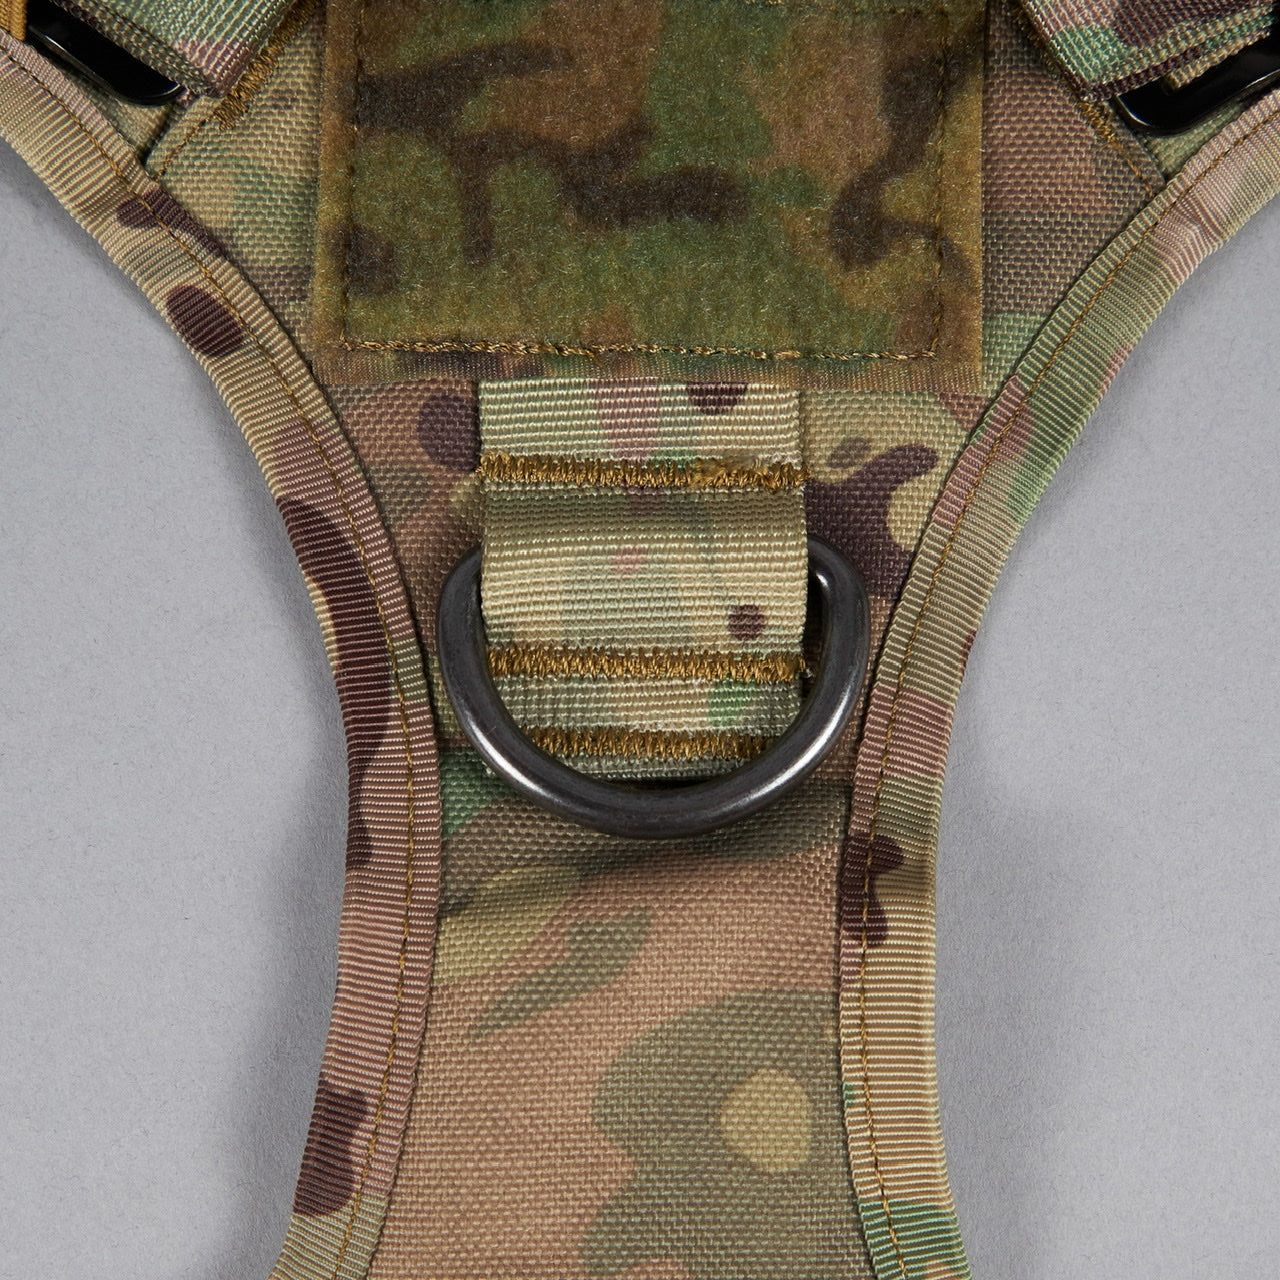 Camo Tactical Dog Vest Harness